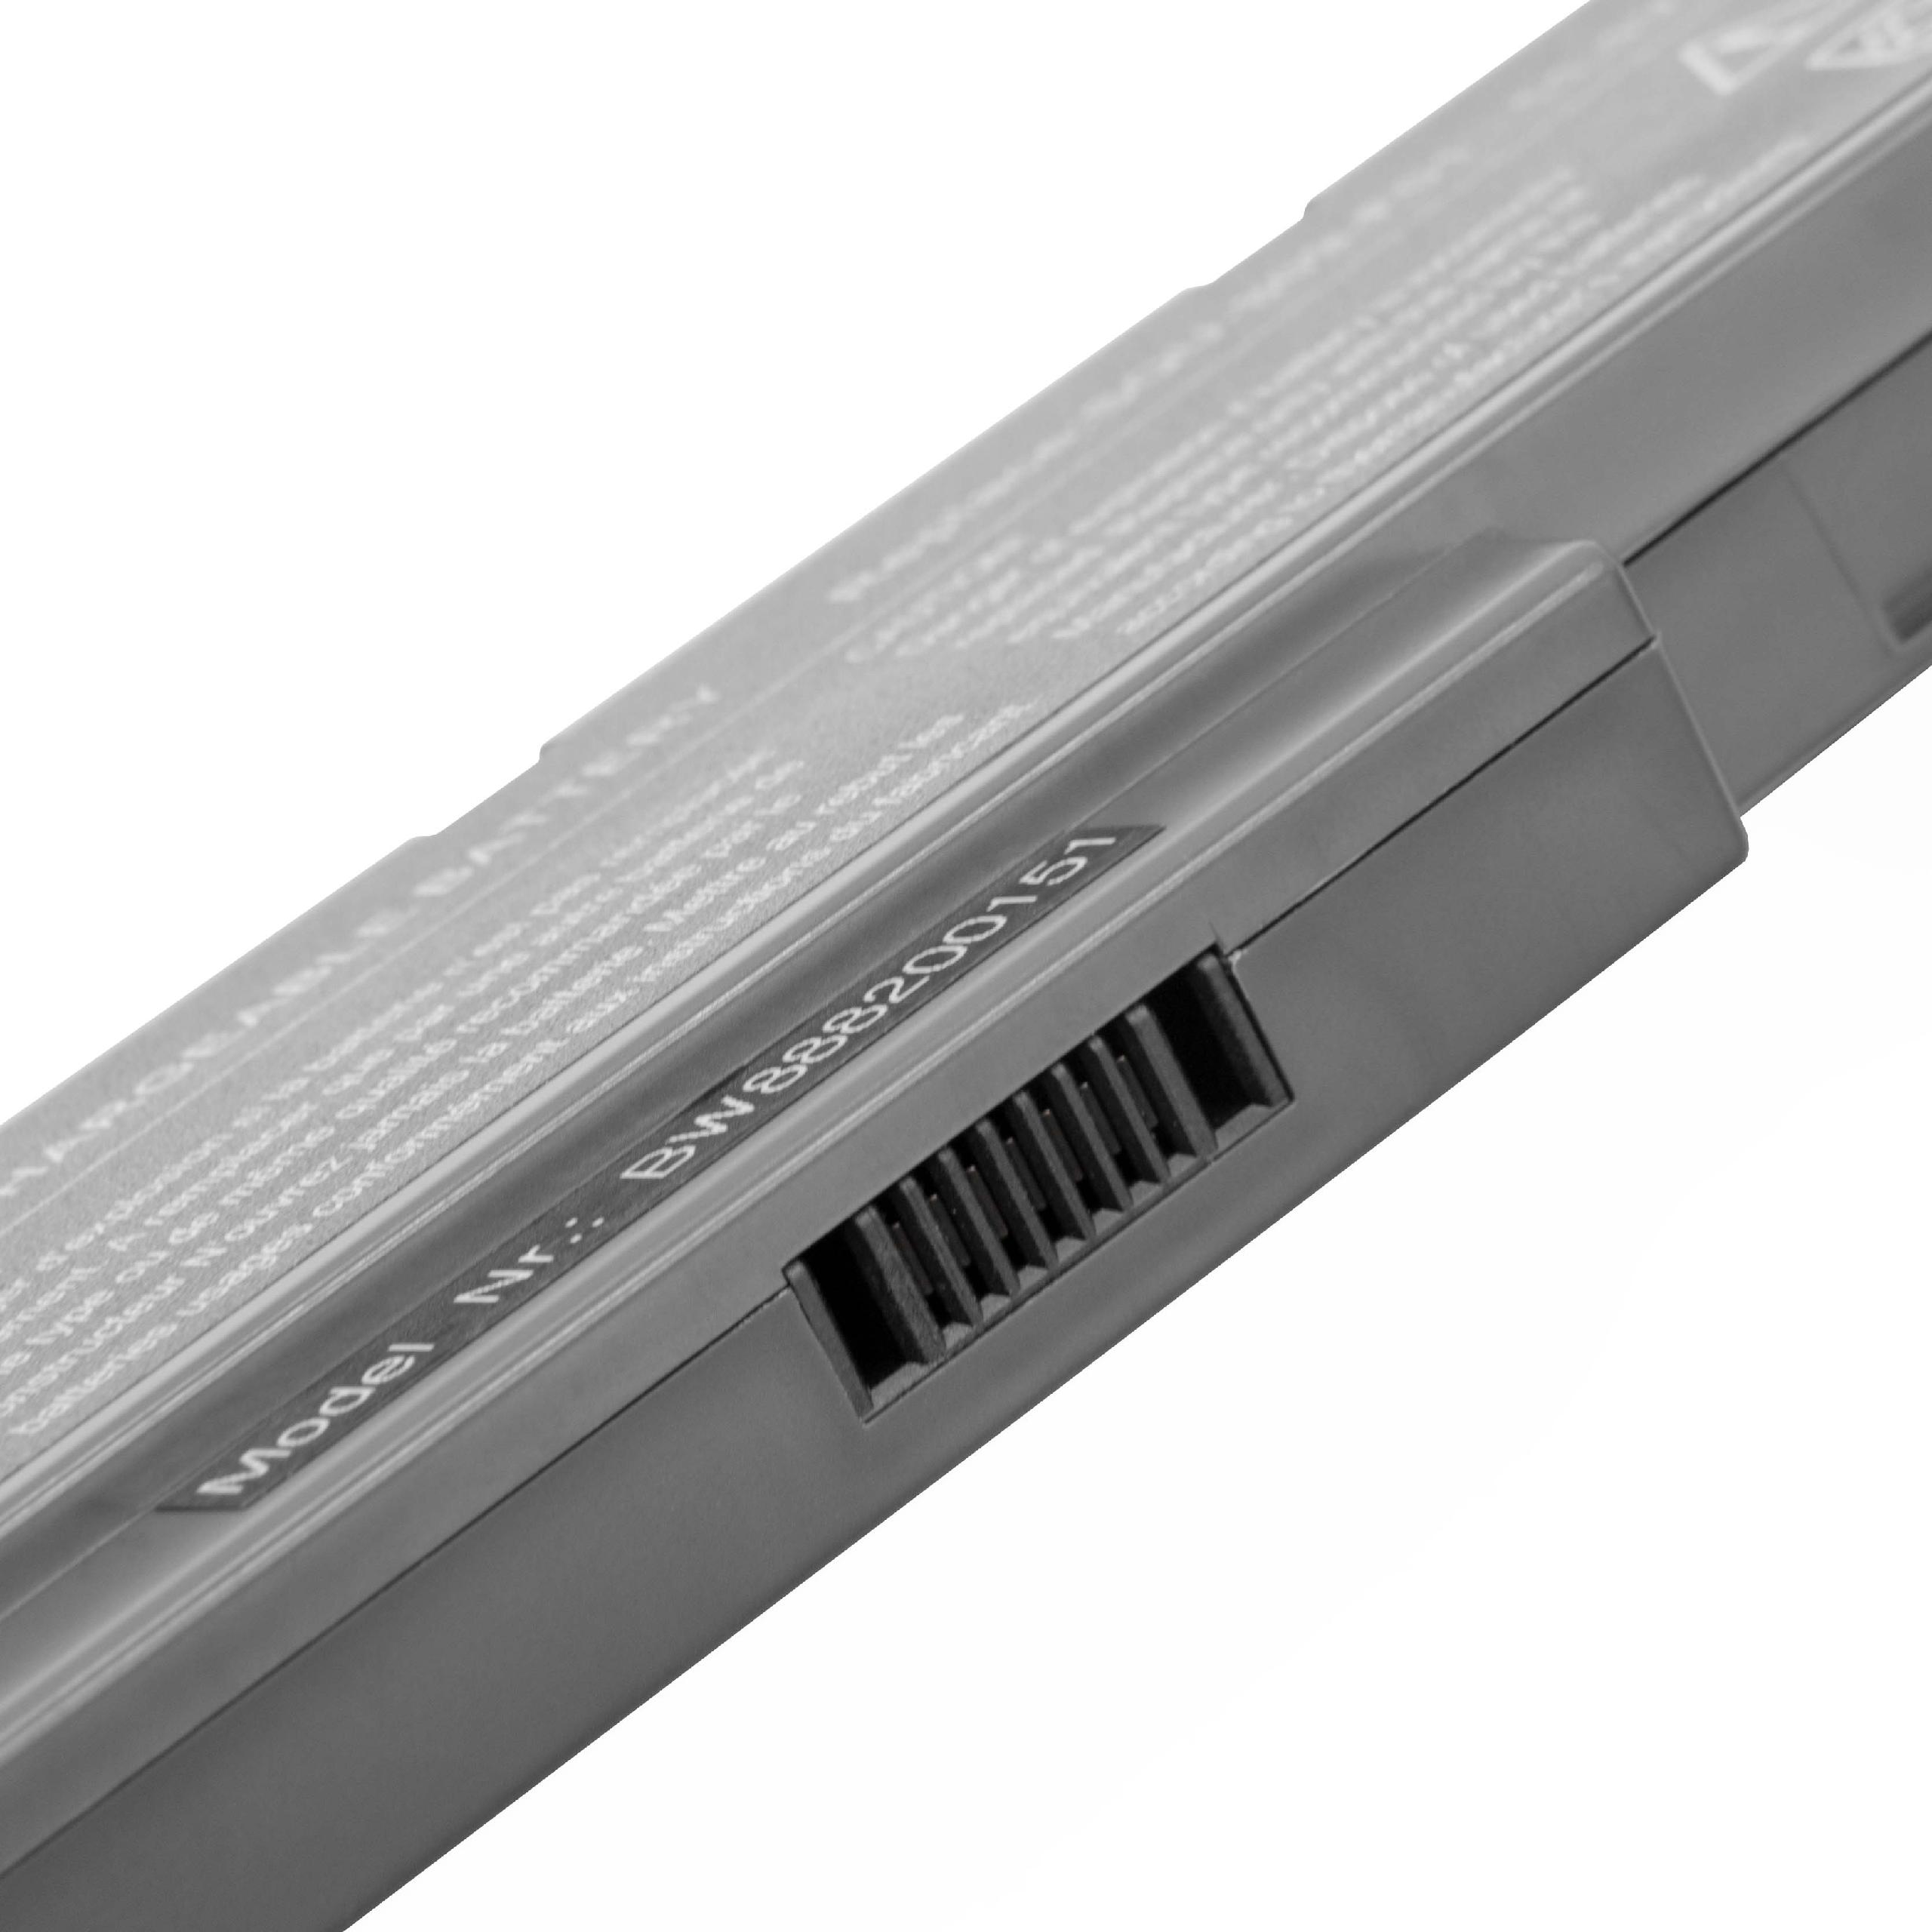 Akumulator do laptopa zamiennik Fujitsu-Siemens 3UR18650-2-T0182 - 5200 mAh 11,1 V Li-Ion, czarny